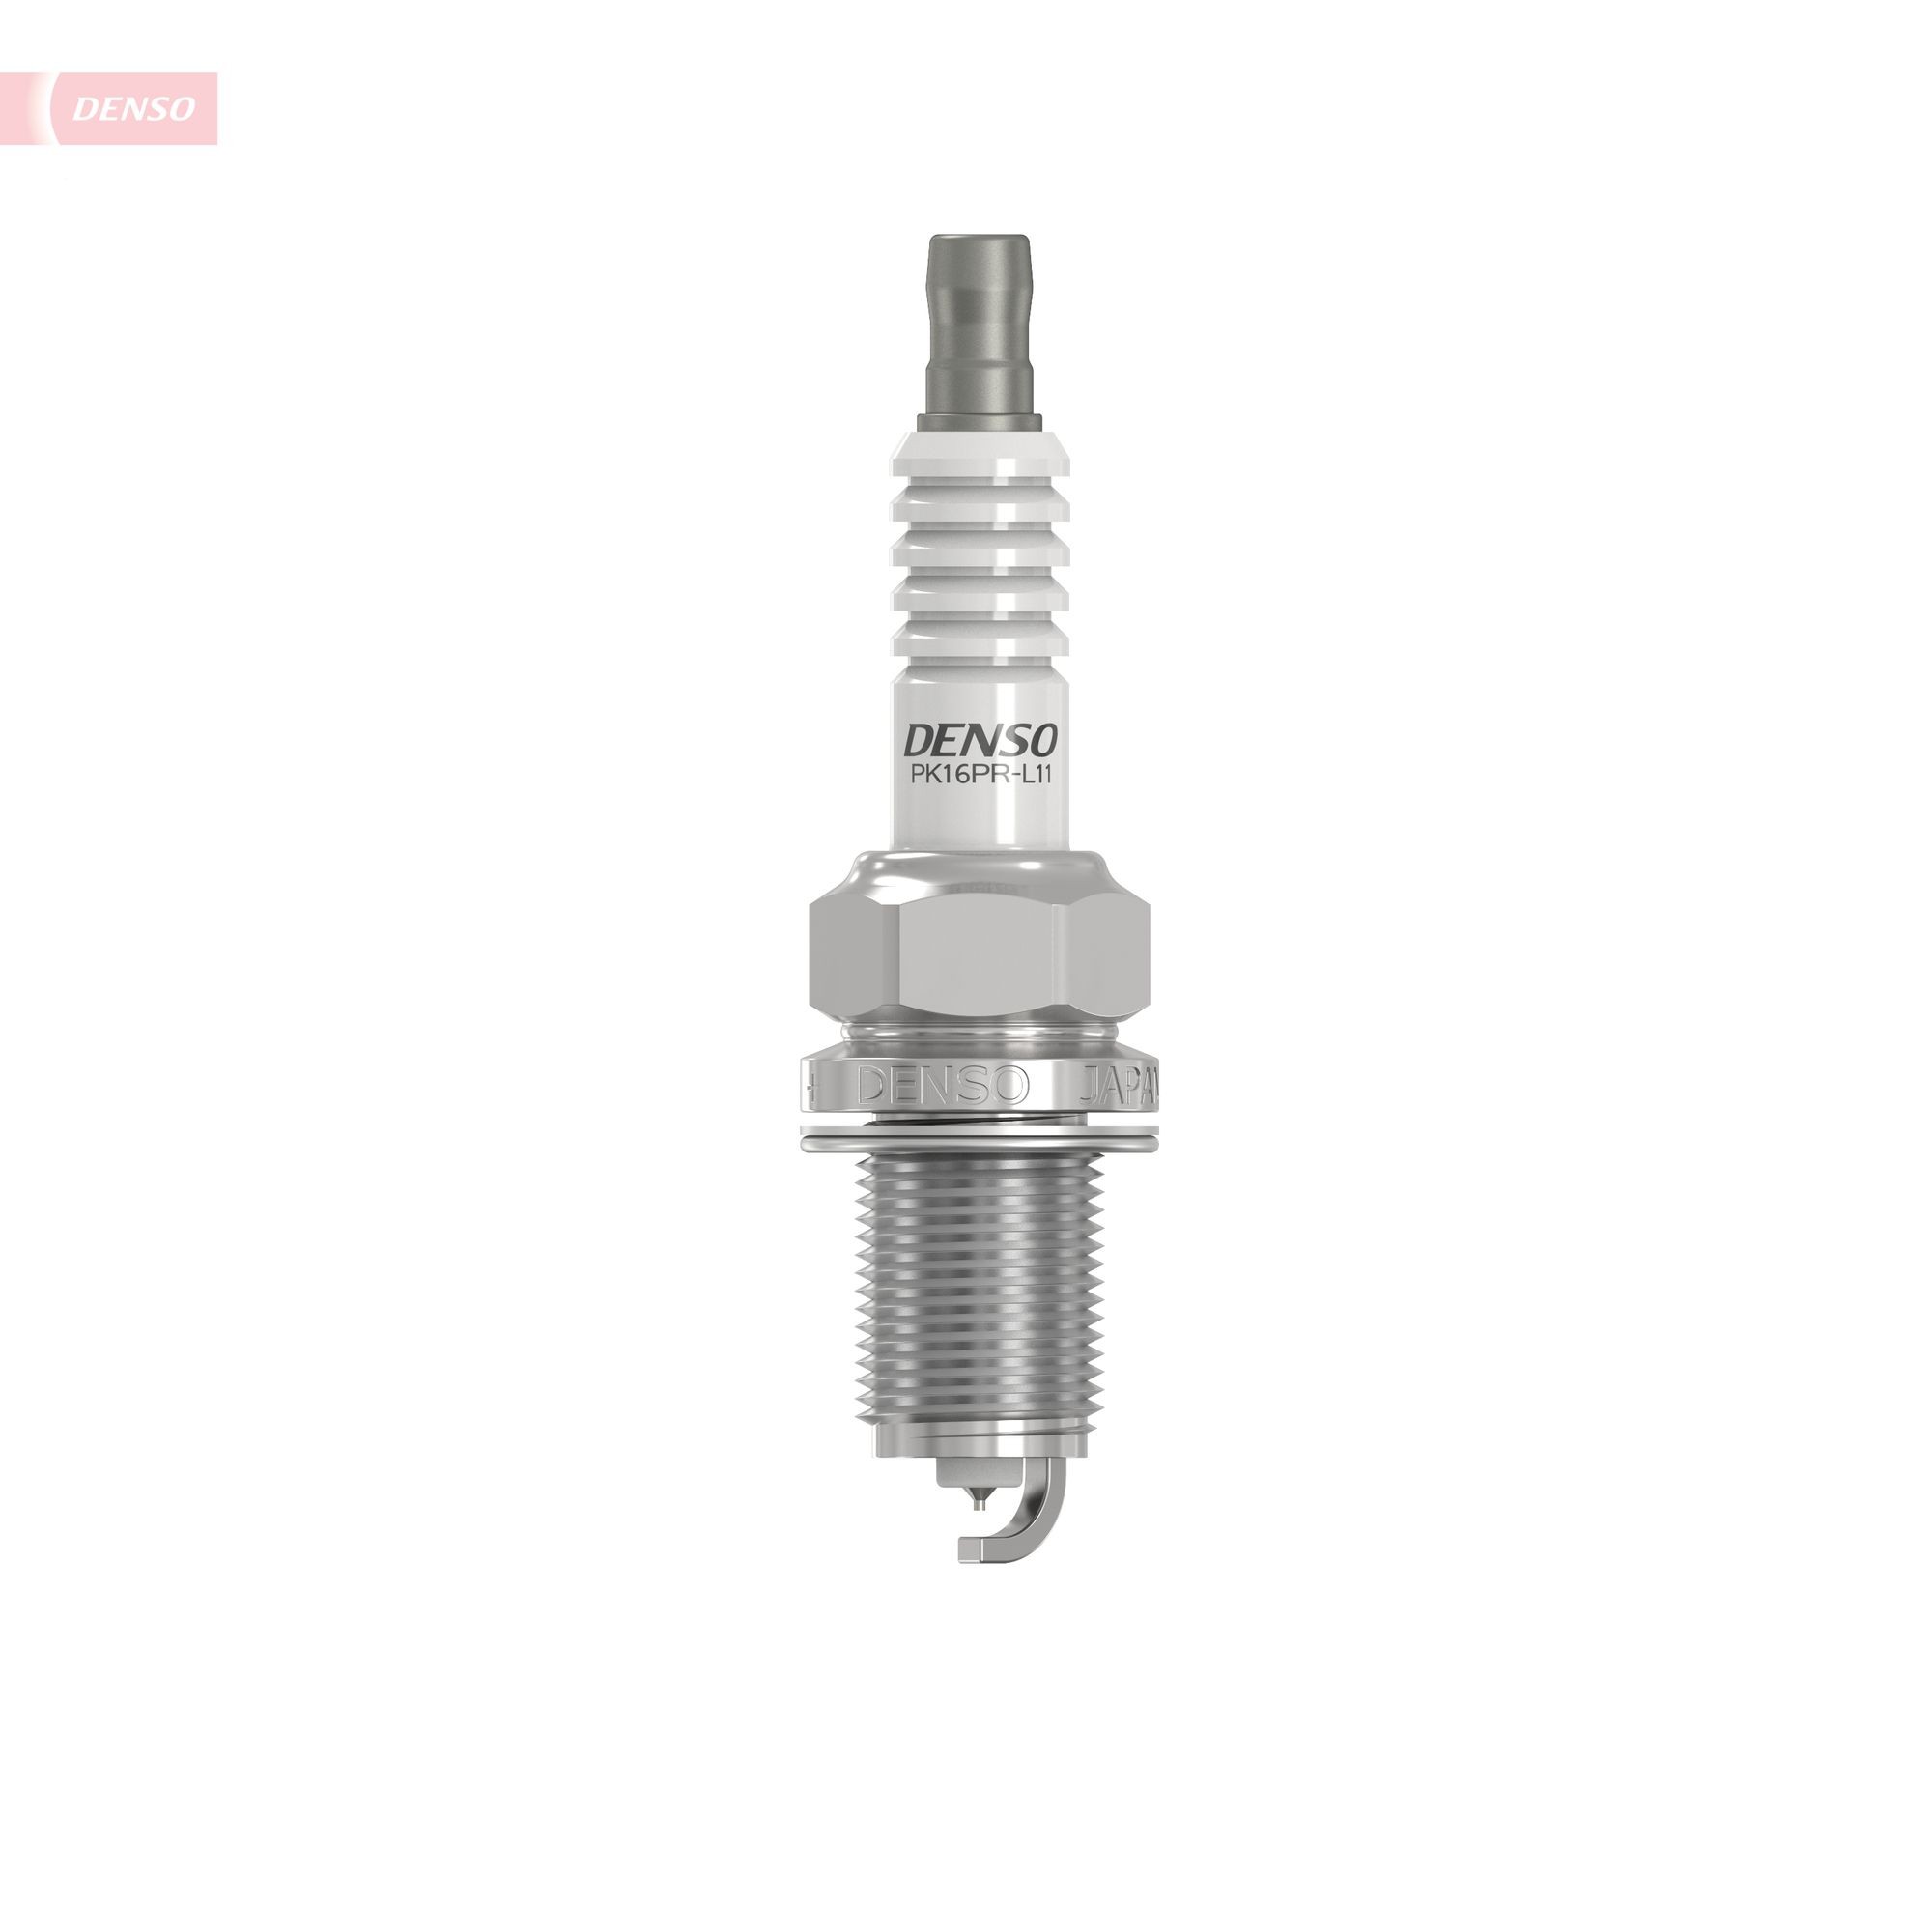 DENSO PK16PR-L11 Spark plug – excellent service and bargain prices